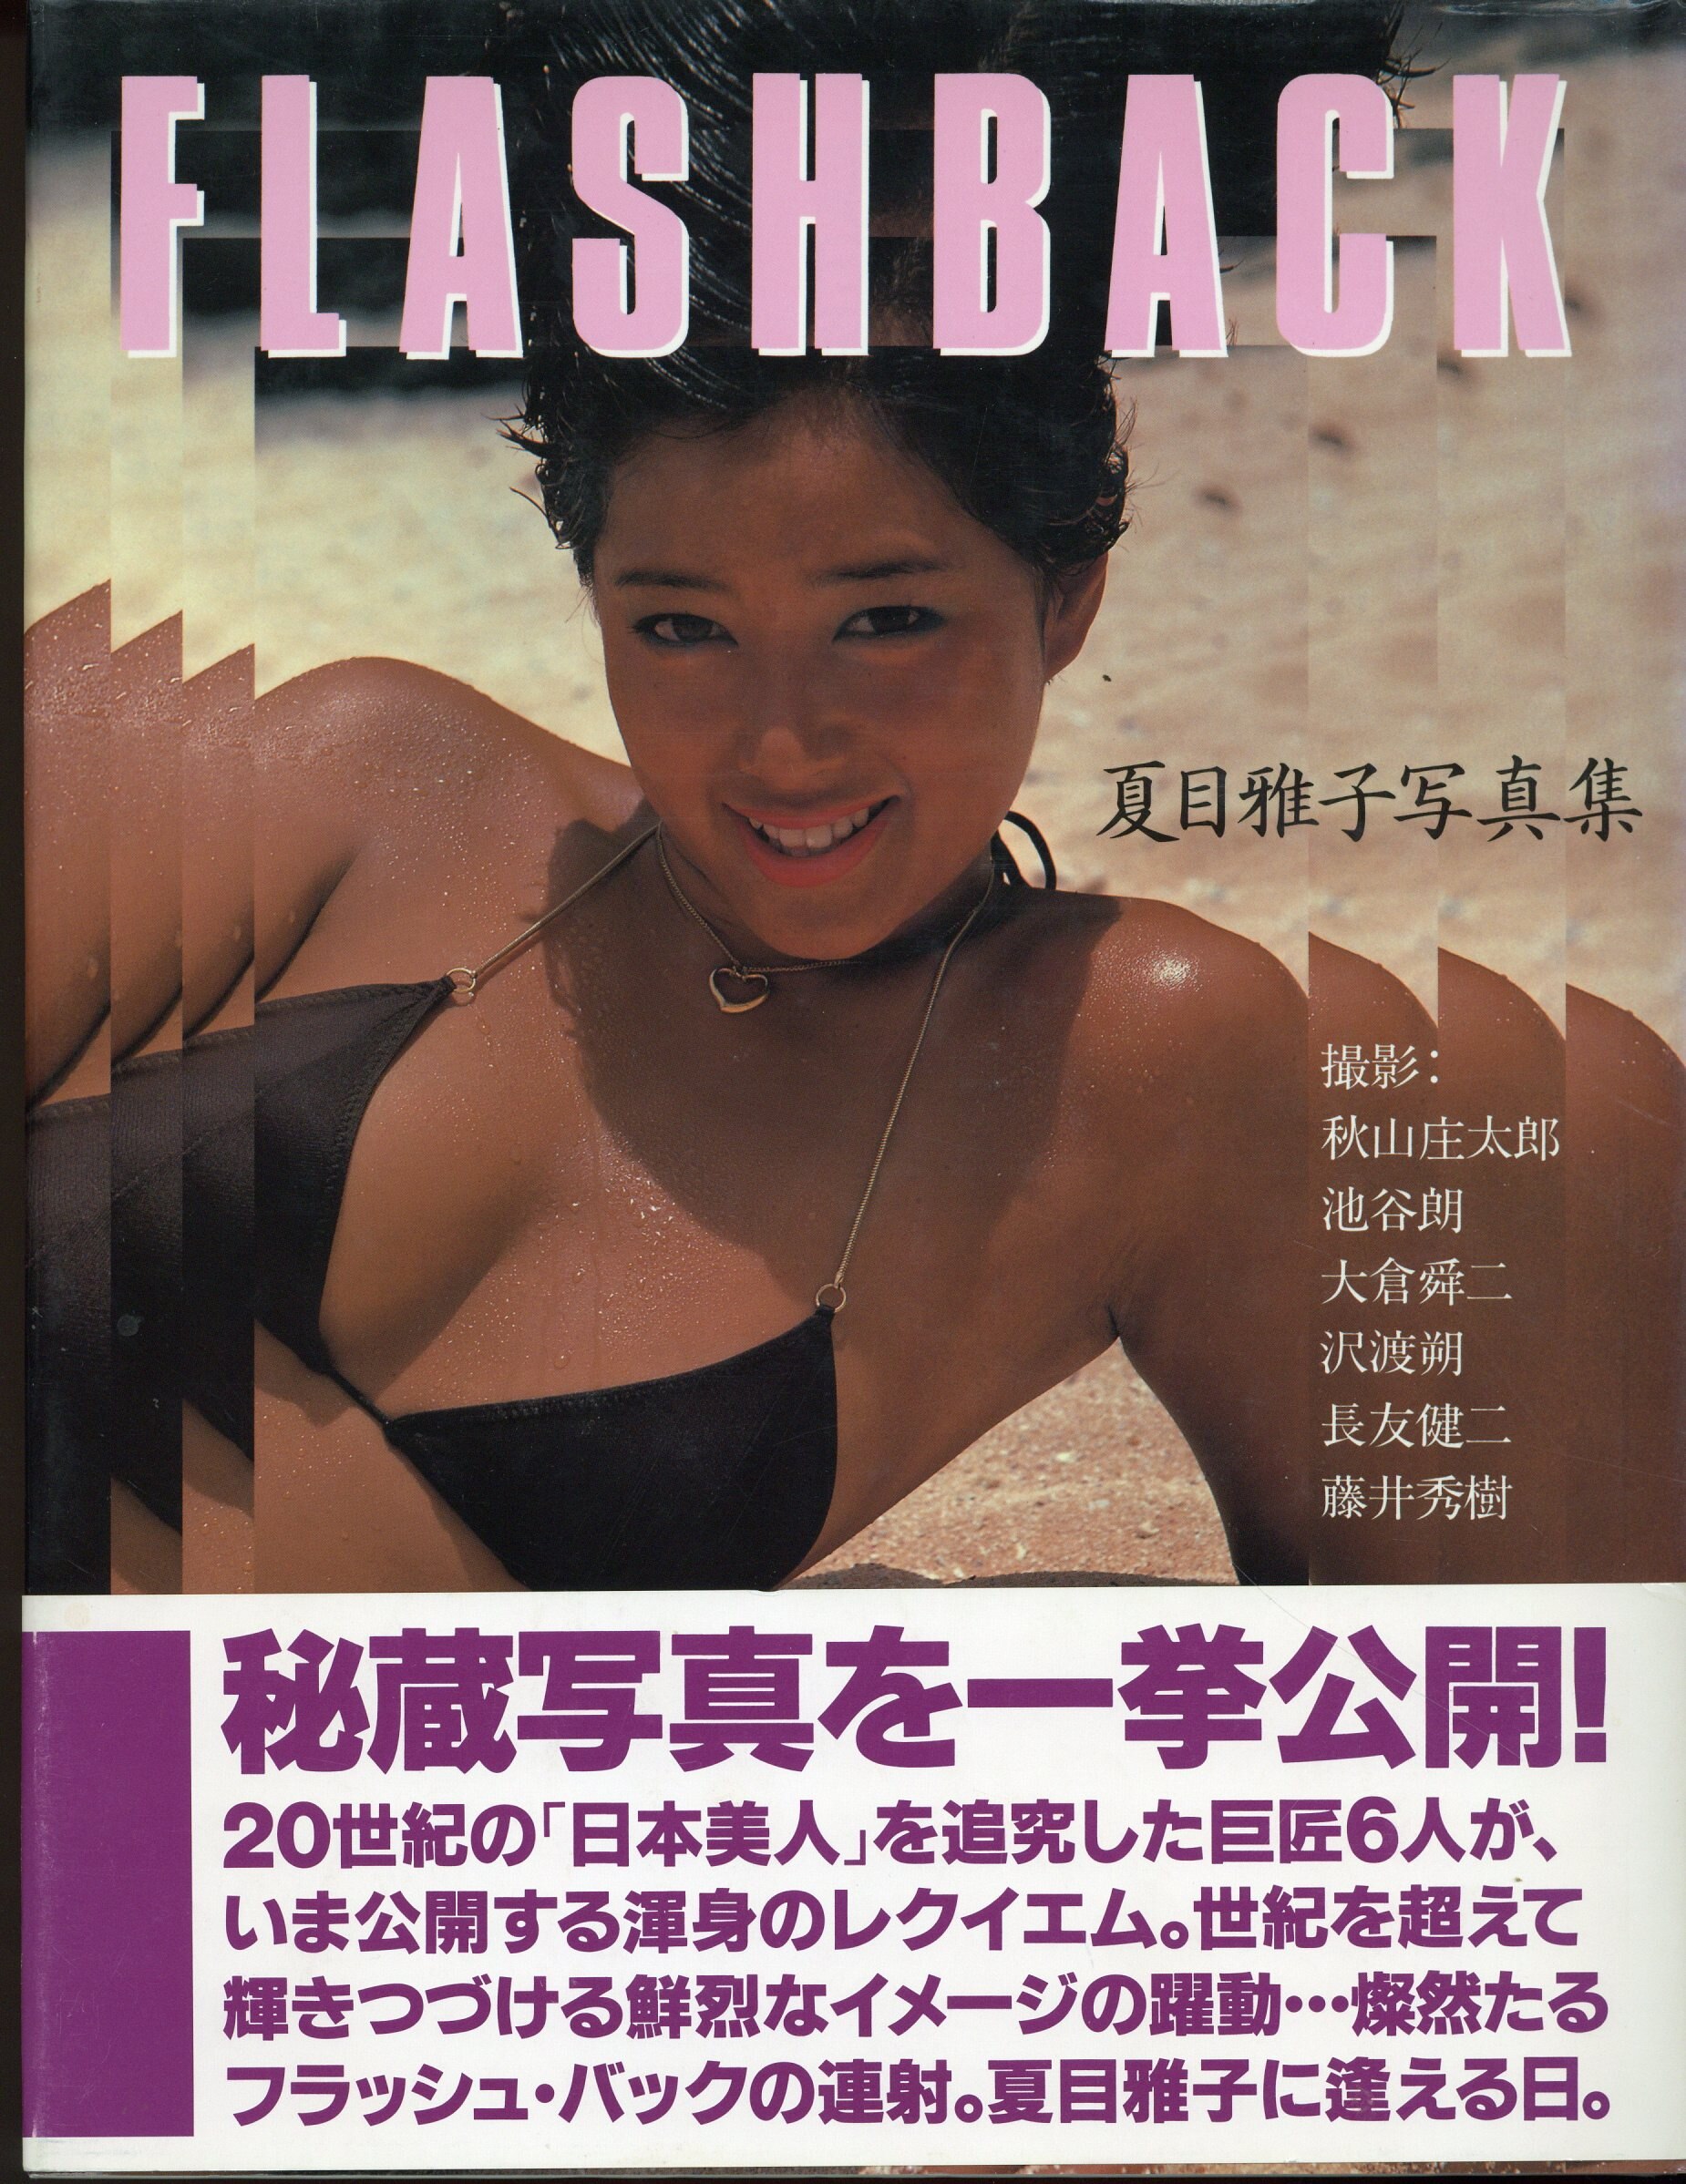 Masako natsume nackt